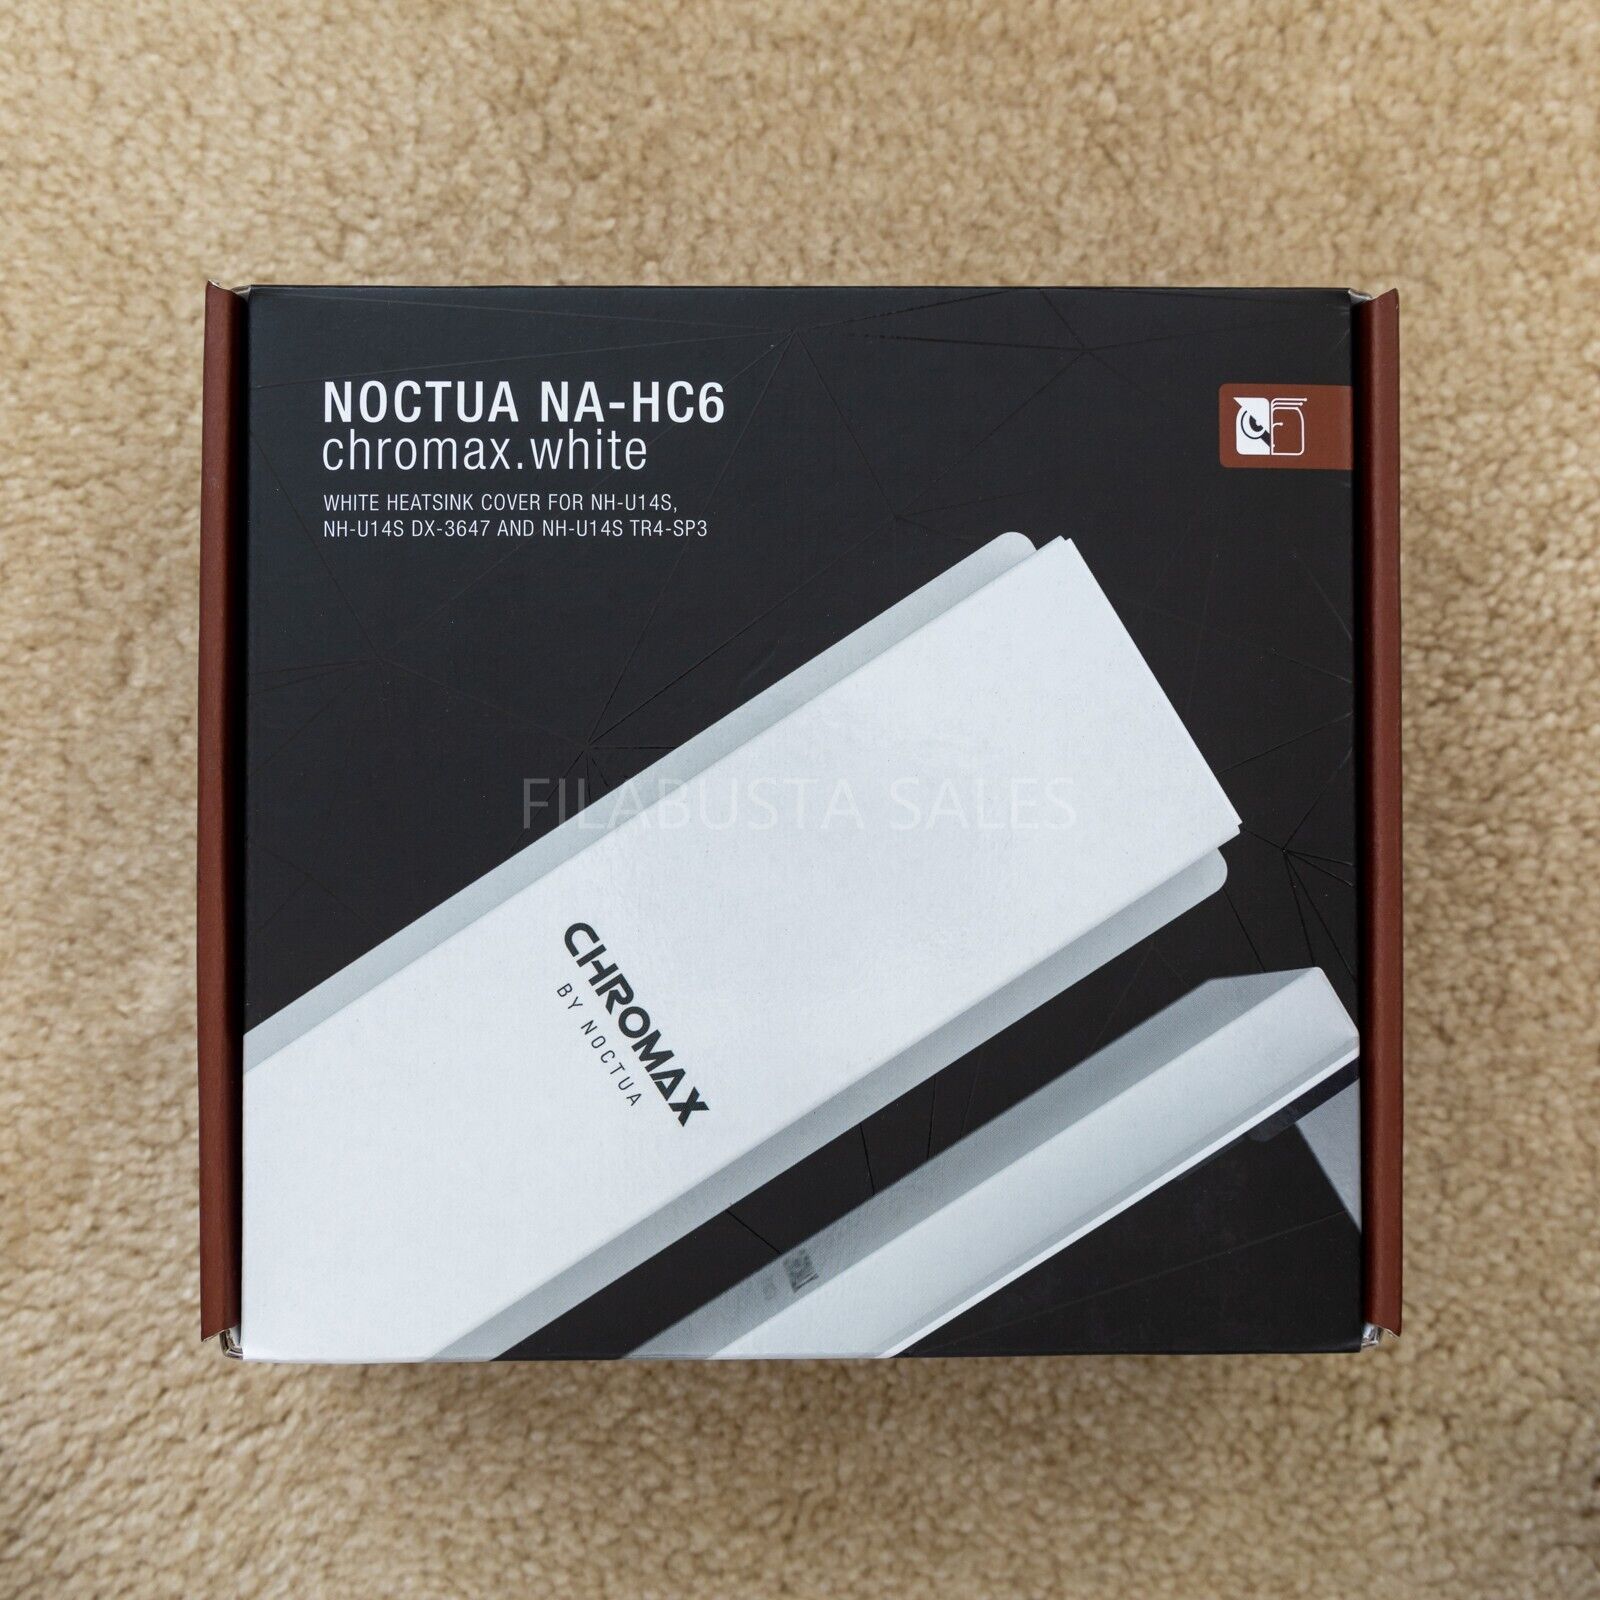 Noctua NA-HC6 chromax.white Heatsink Cover for NH-U14S and TR4-SP3, DX-3647